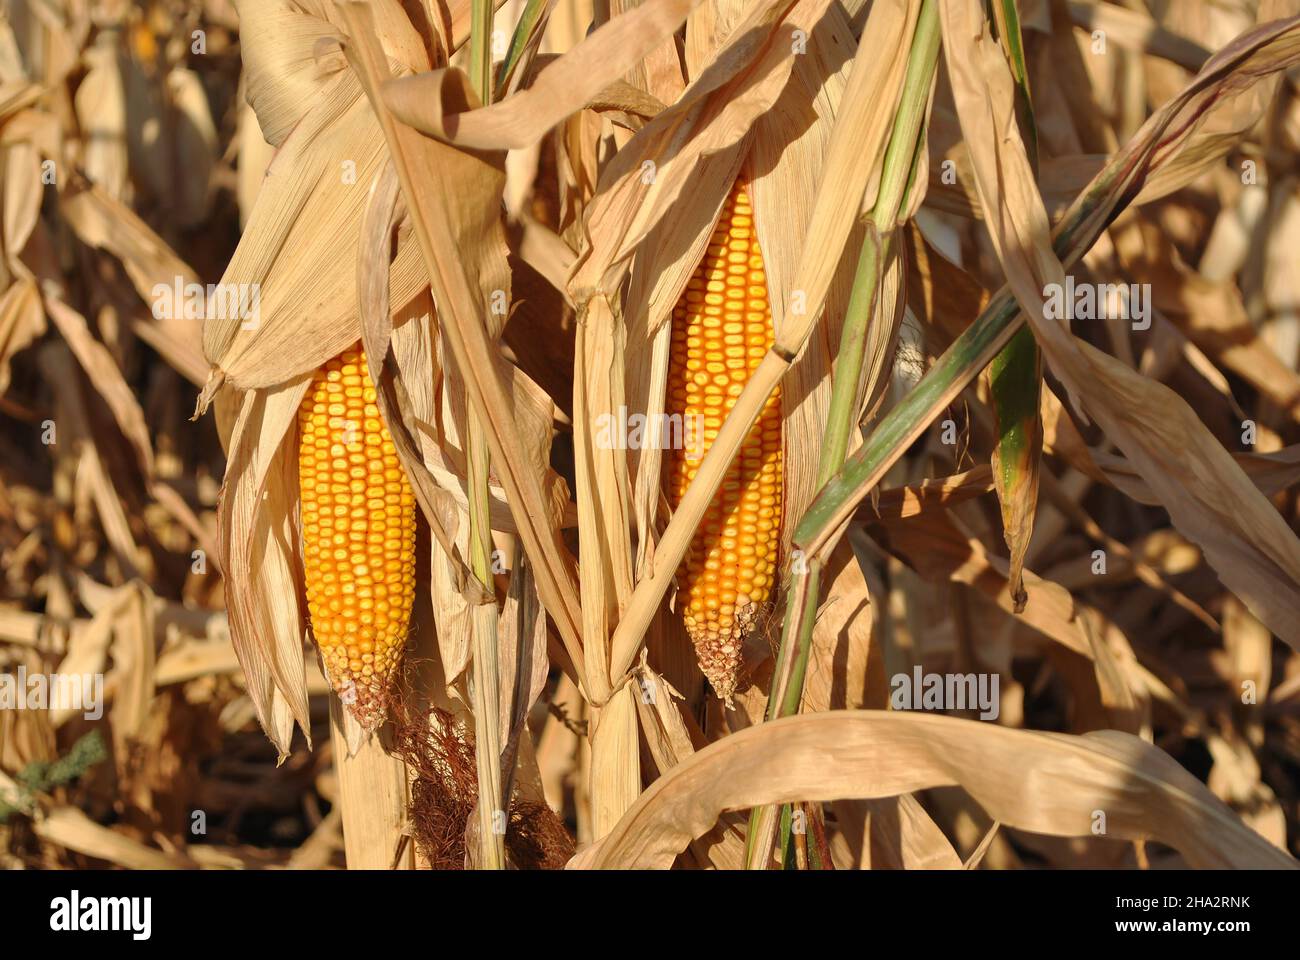 Moize corn cob close up detail, dry plants blurry background Stock Photo